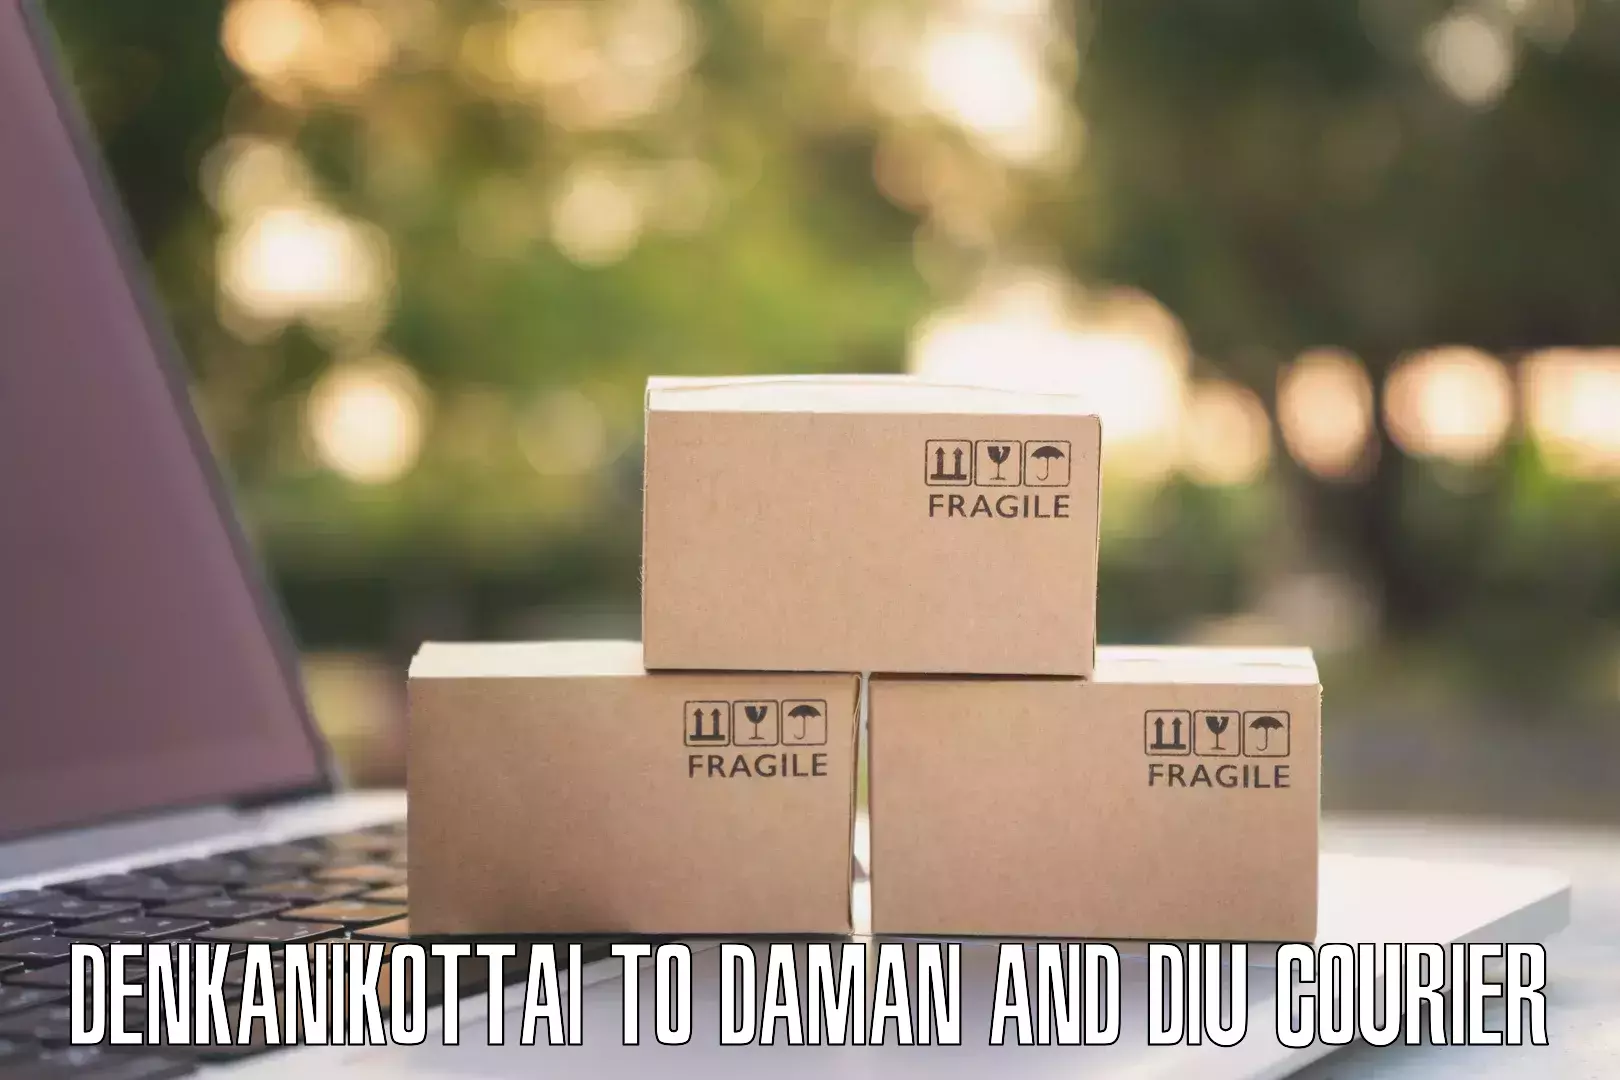 Overnight delivery Denkanikottai to Diu